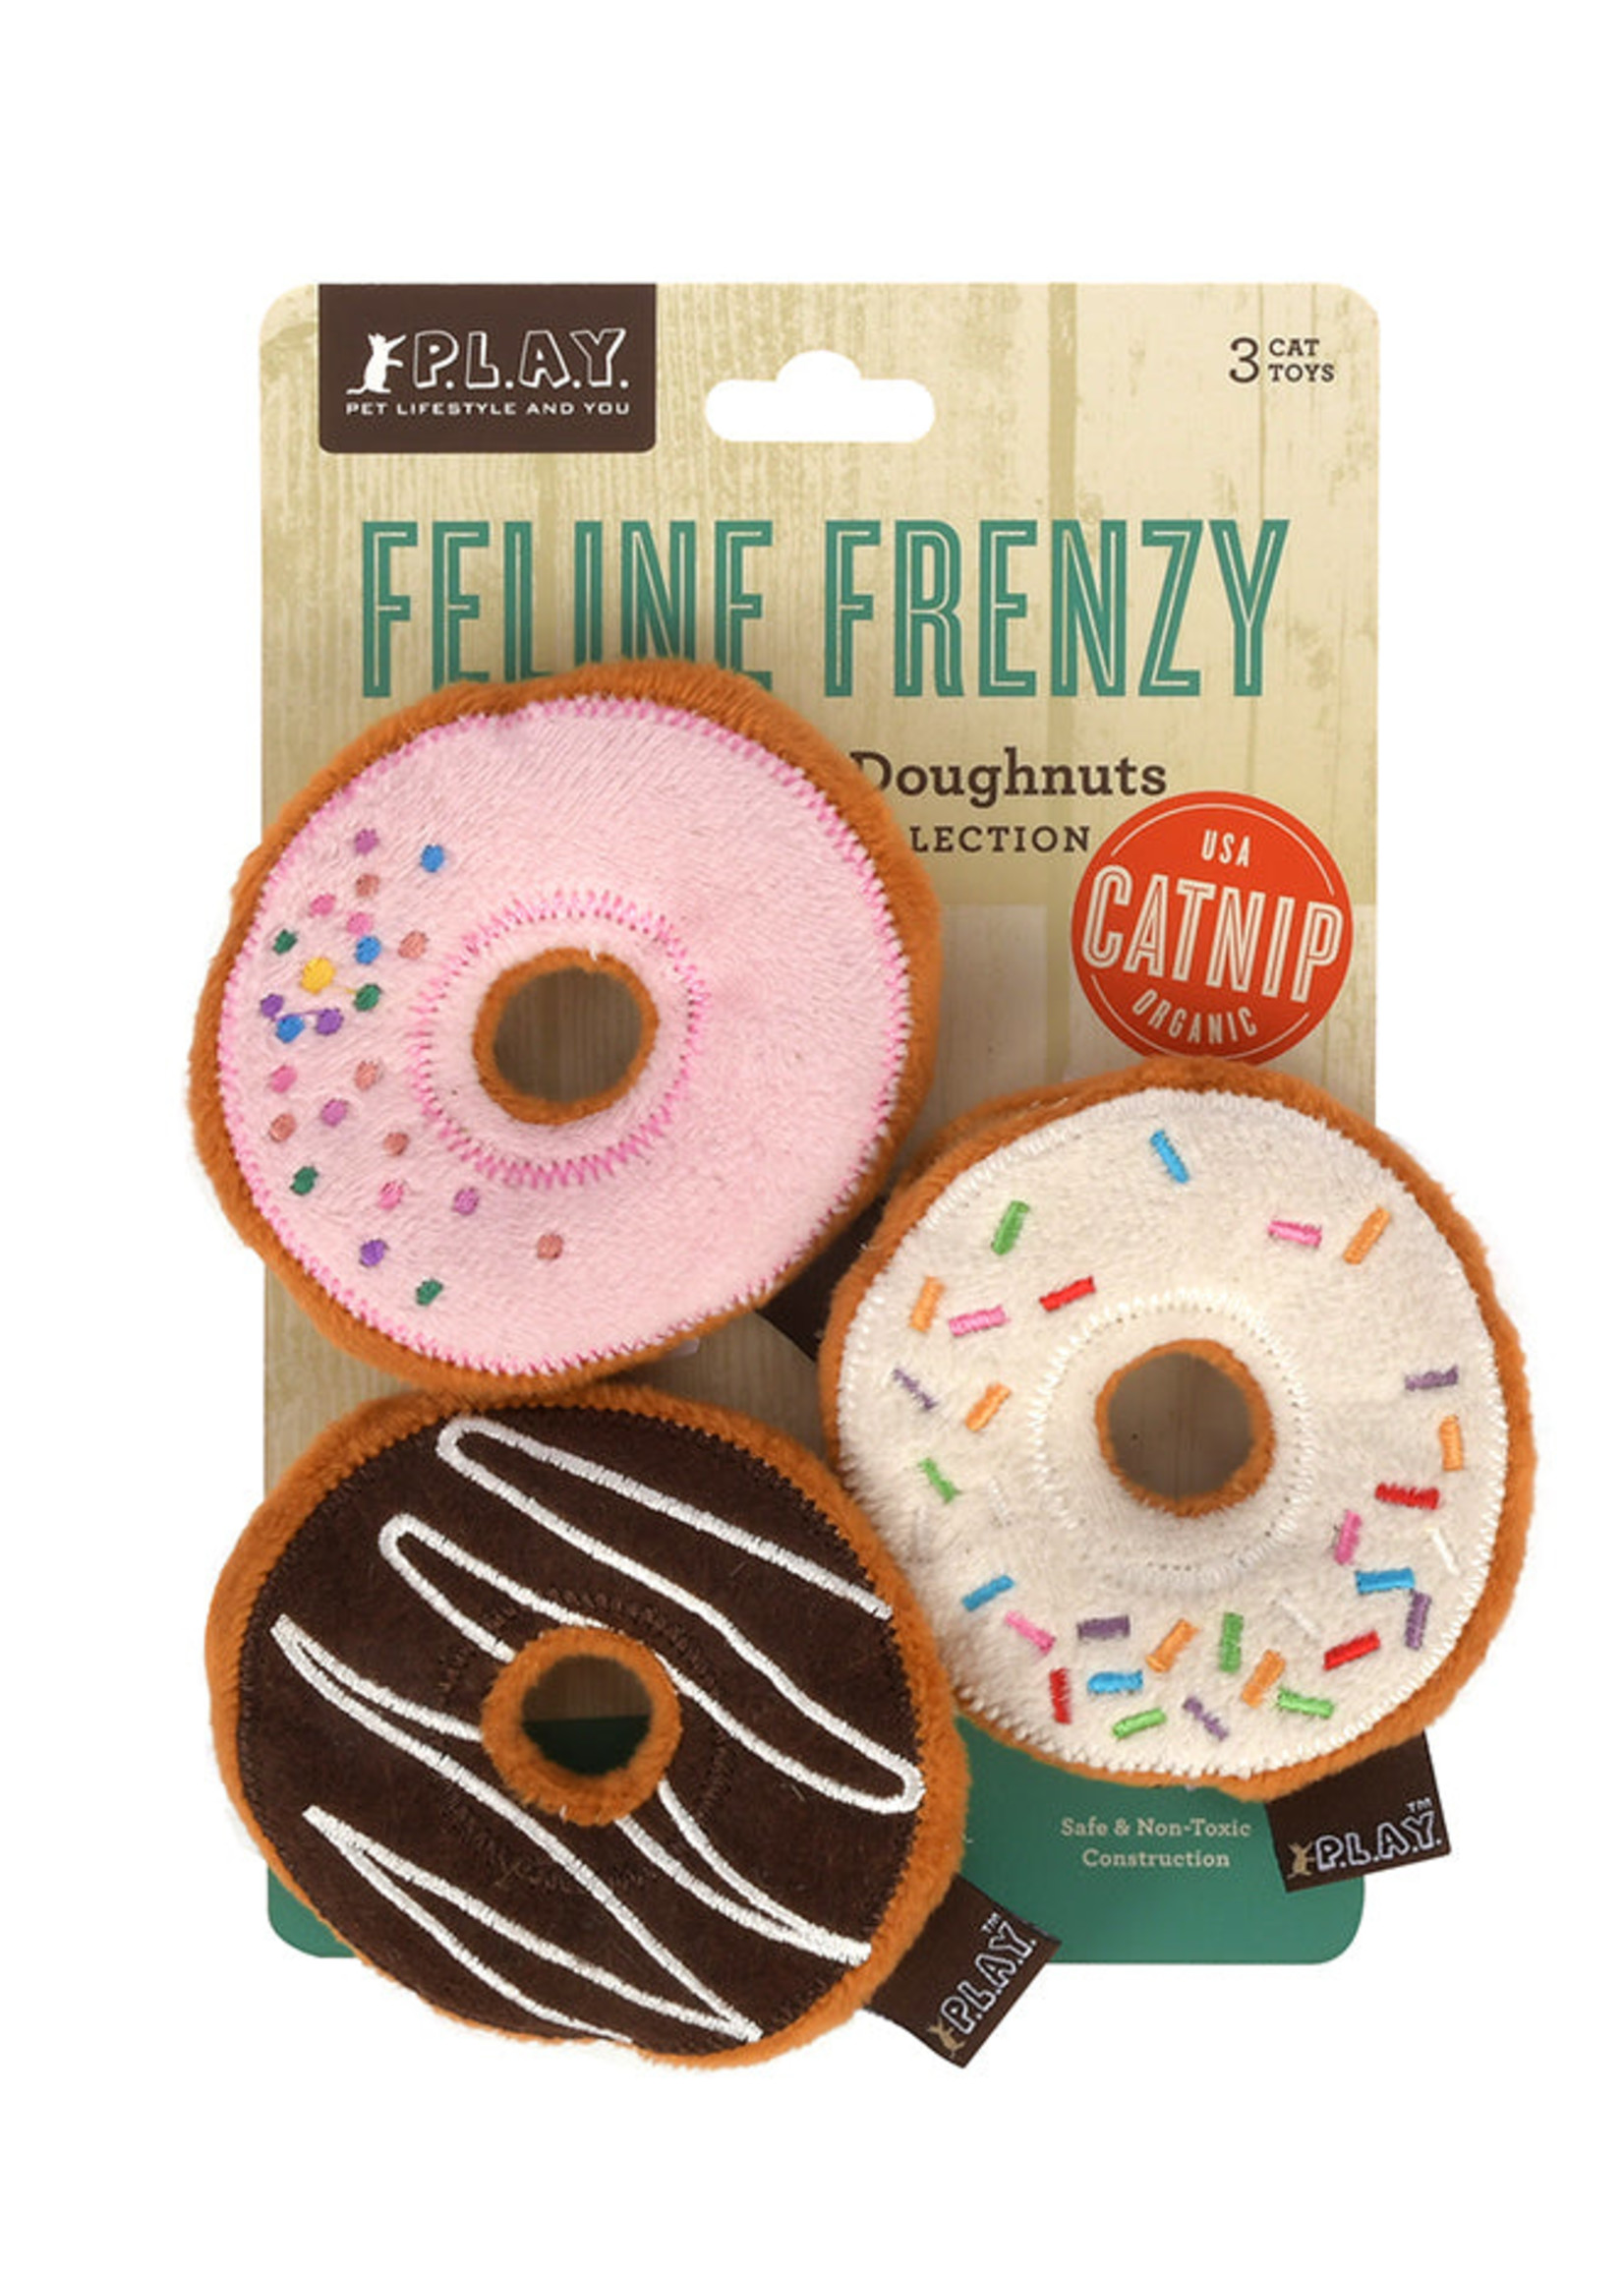 P.L.A.Y. Feline Frenzy Catnip Toy - Kitty Kreme Doughnuts